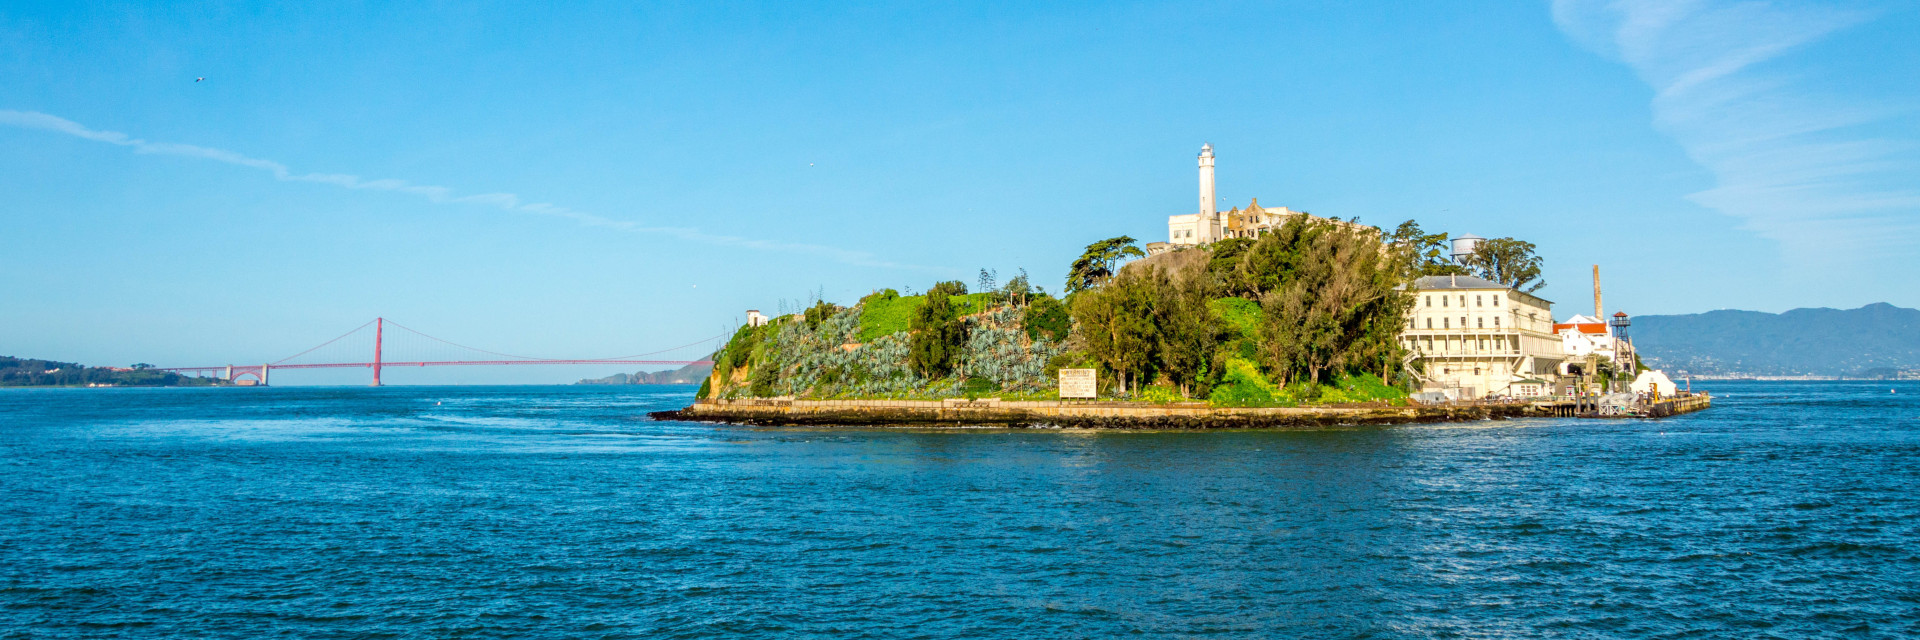 Stunning Alcatraz Island on a perfect summer day